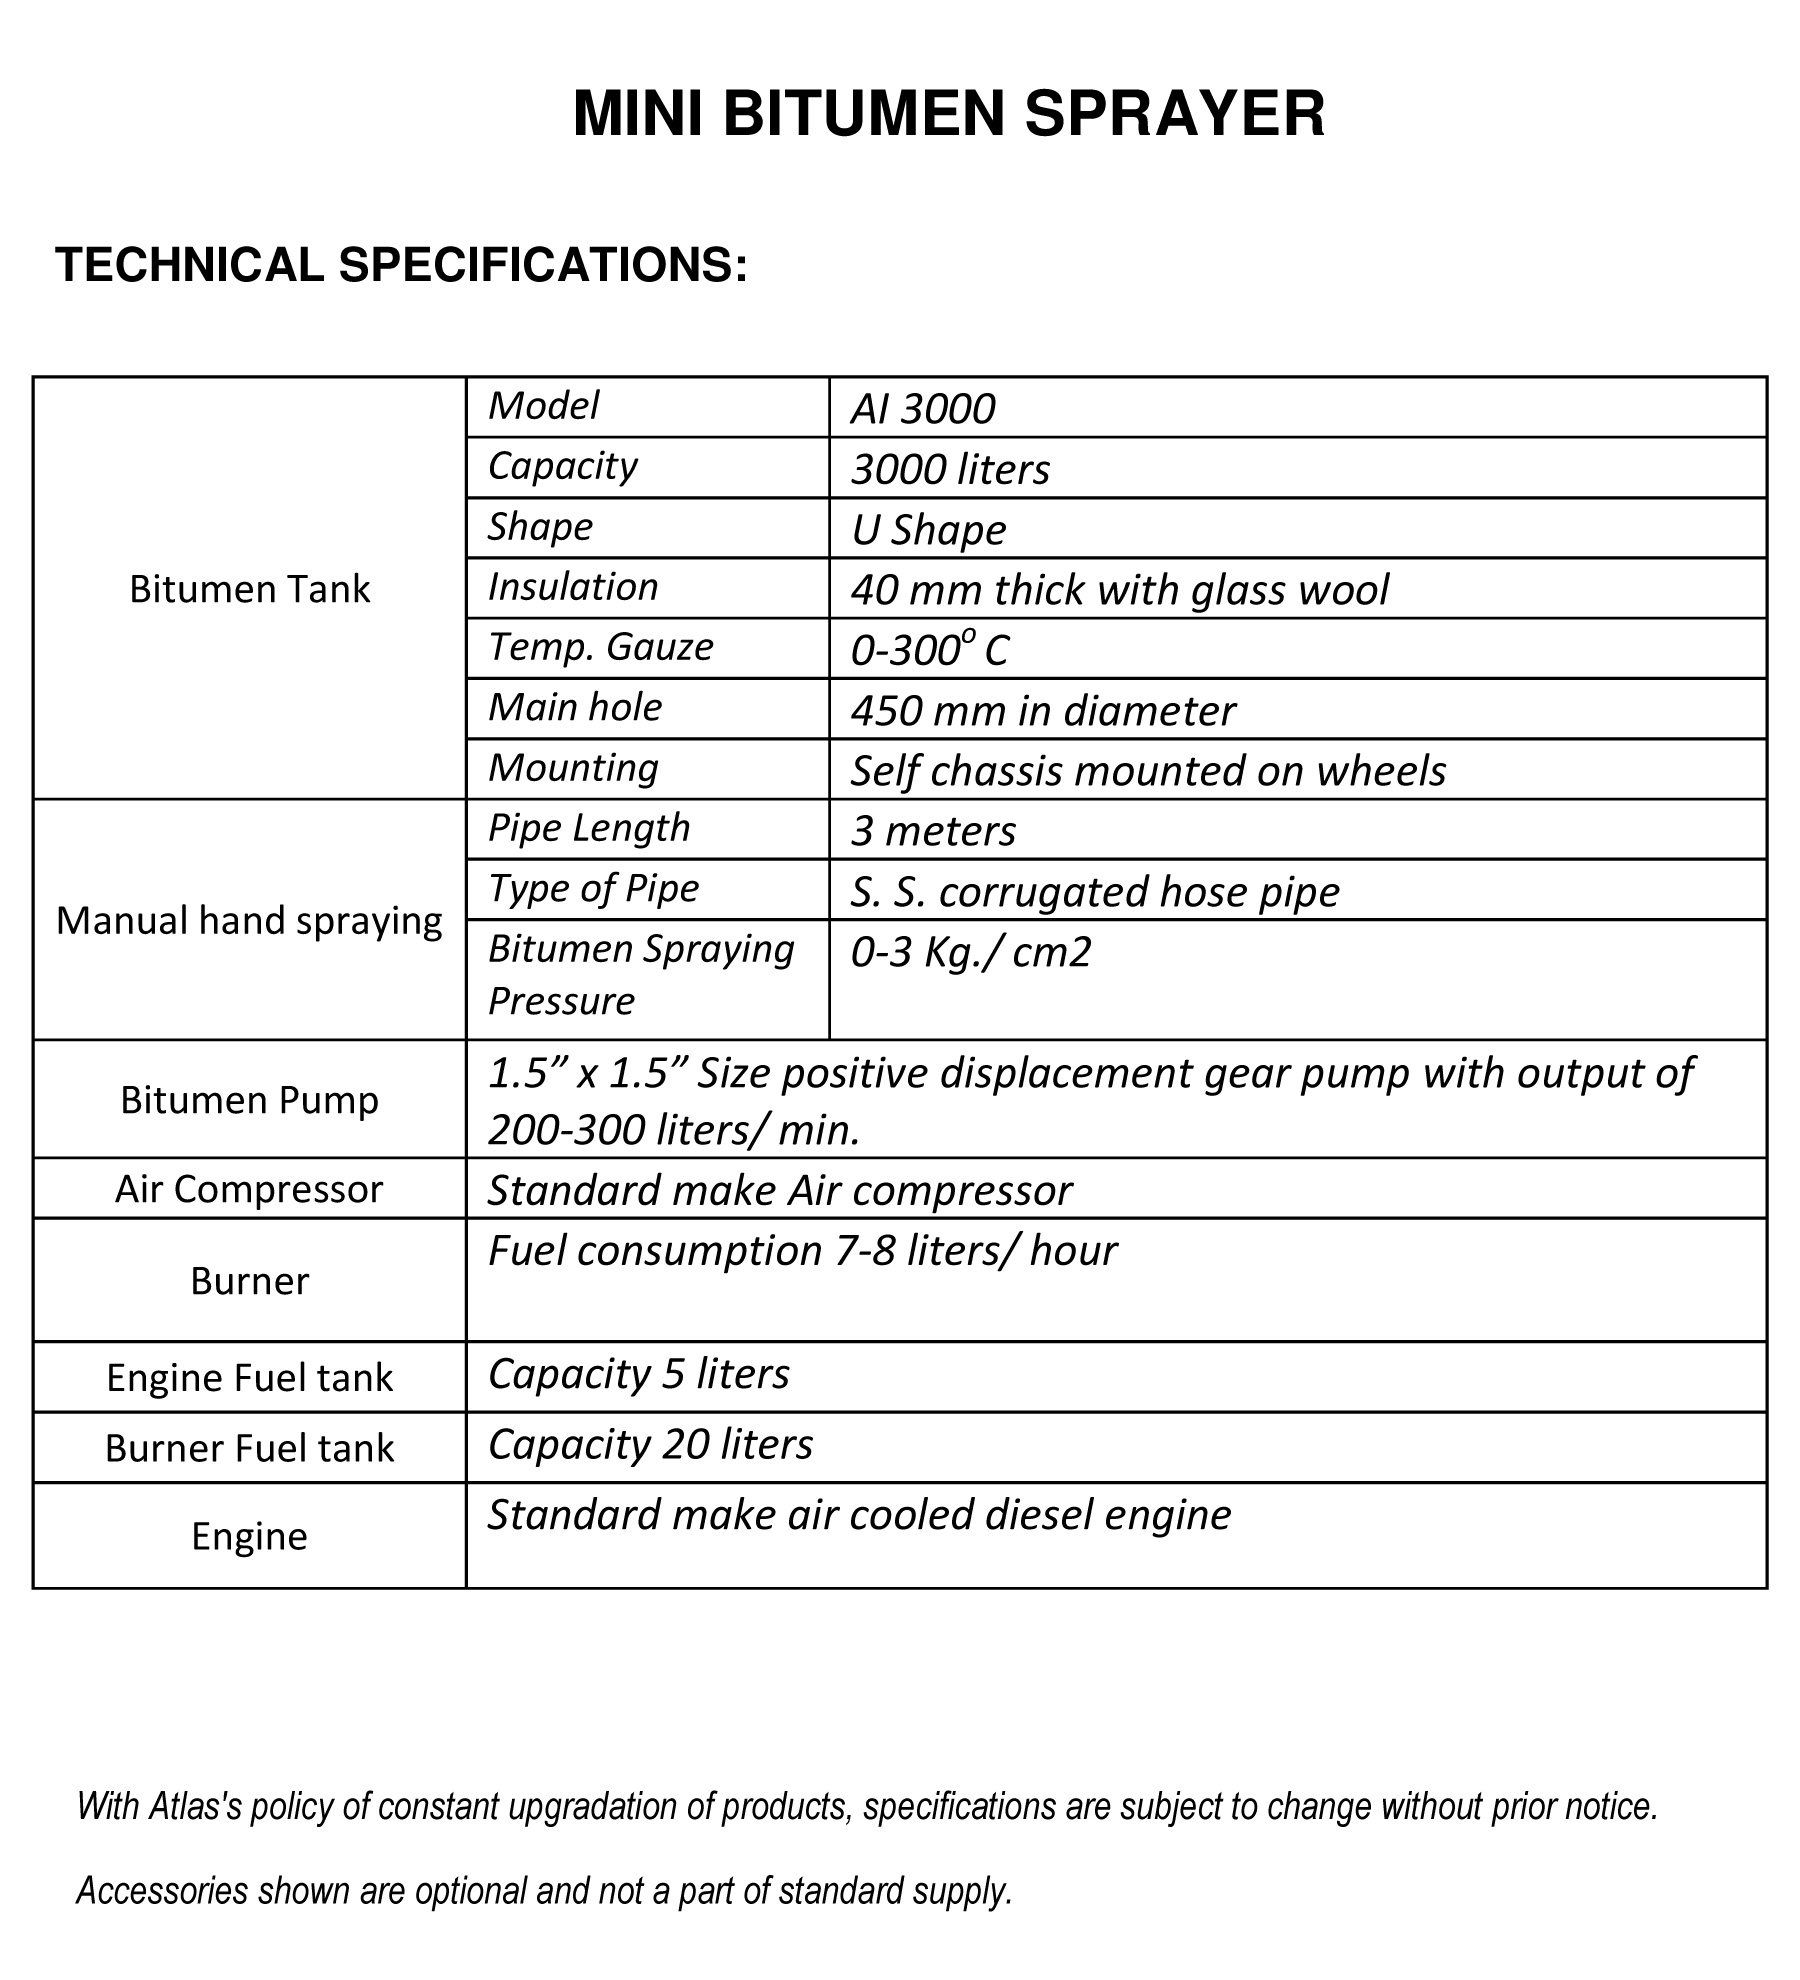 Mini Bitumen Sprayer Specifications